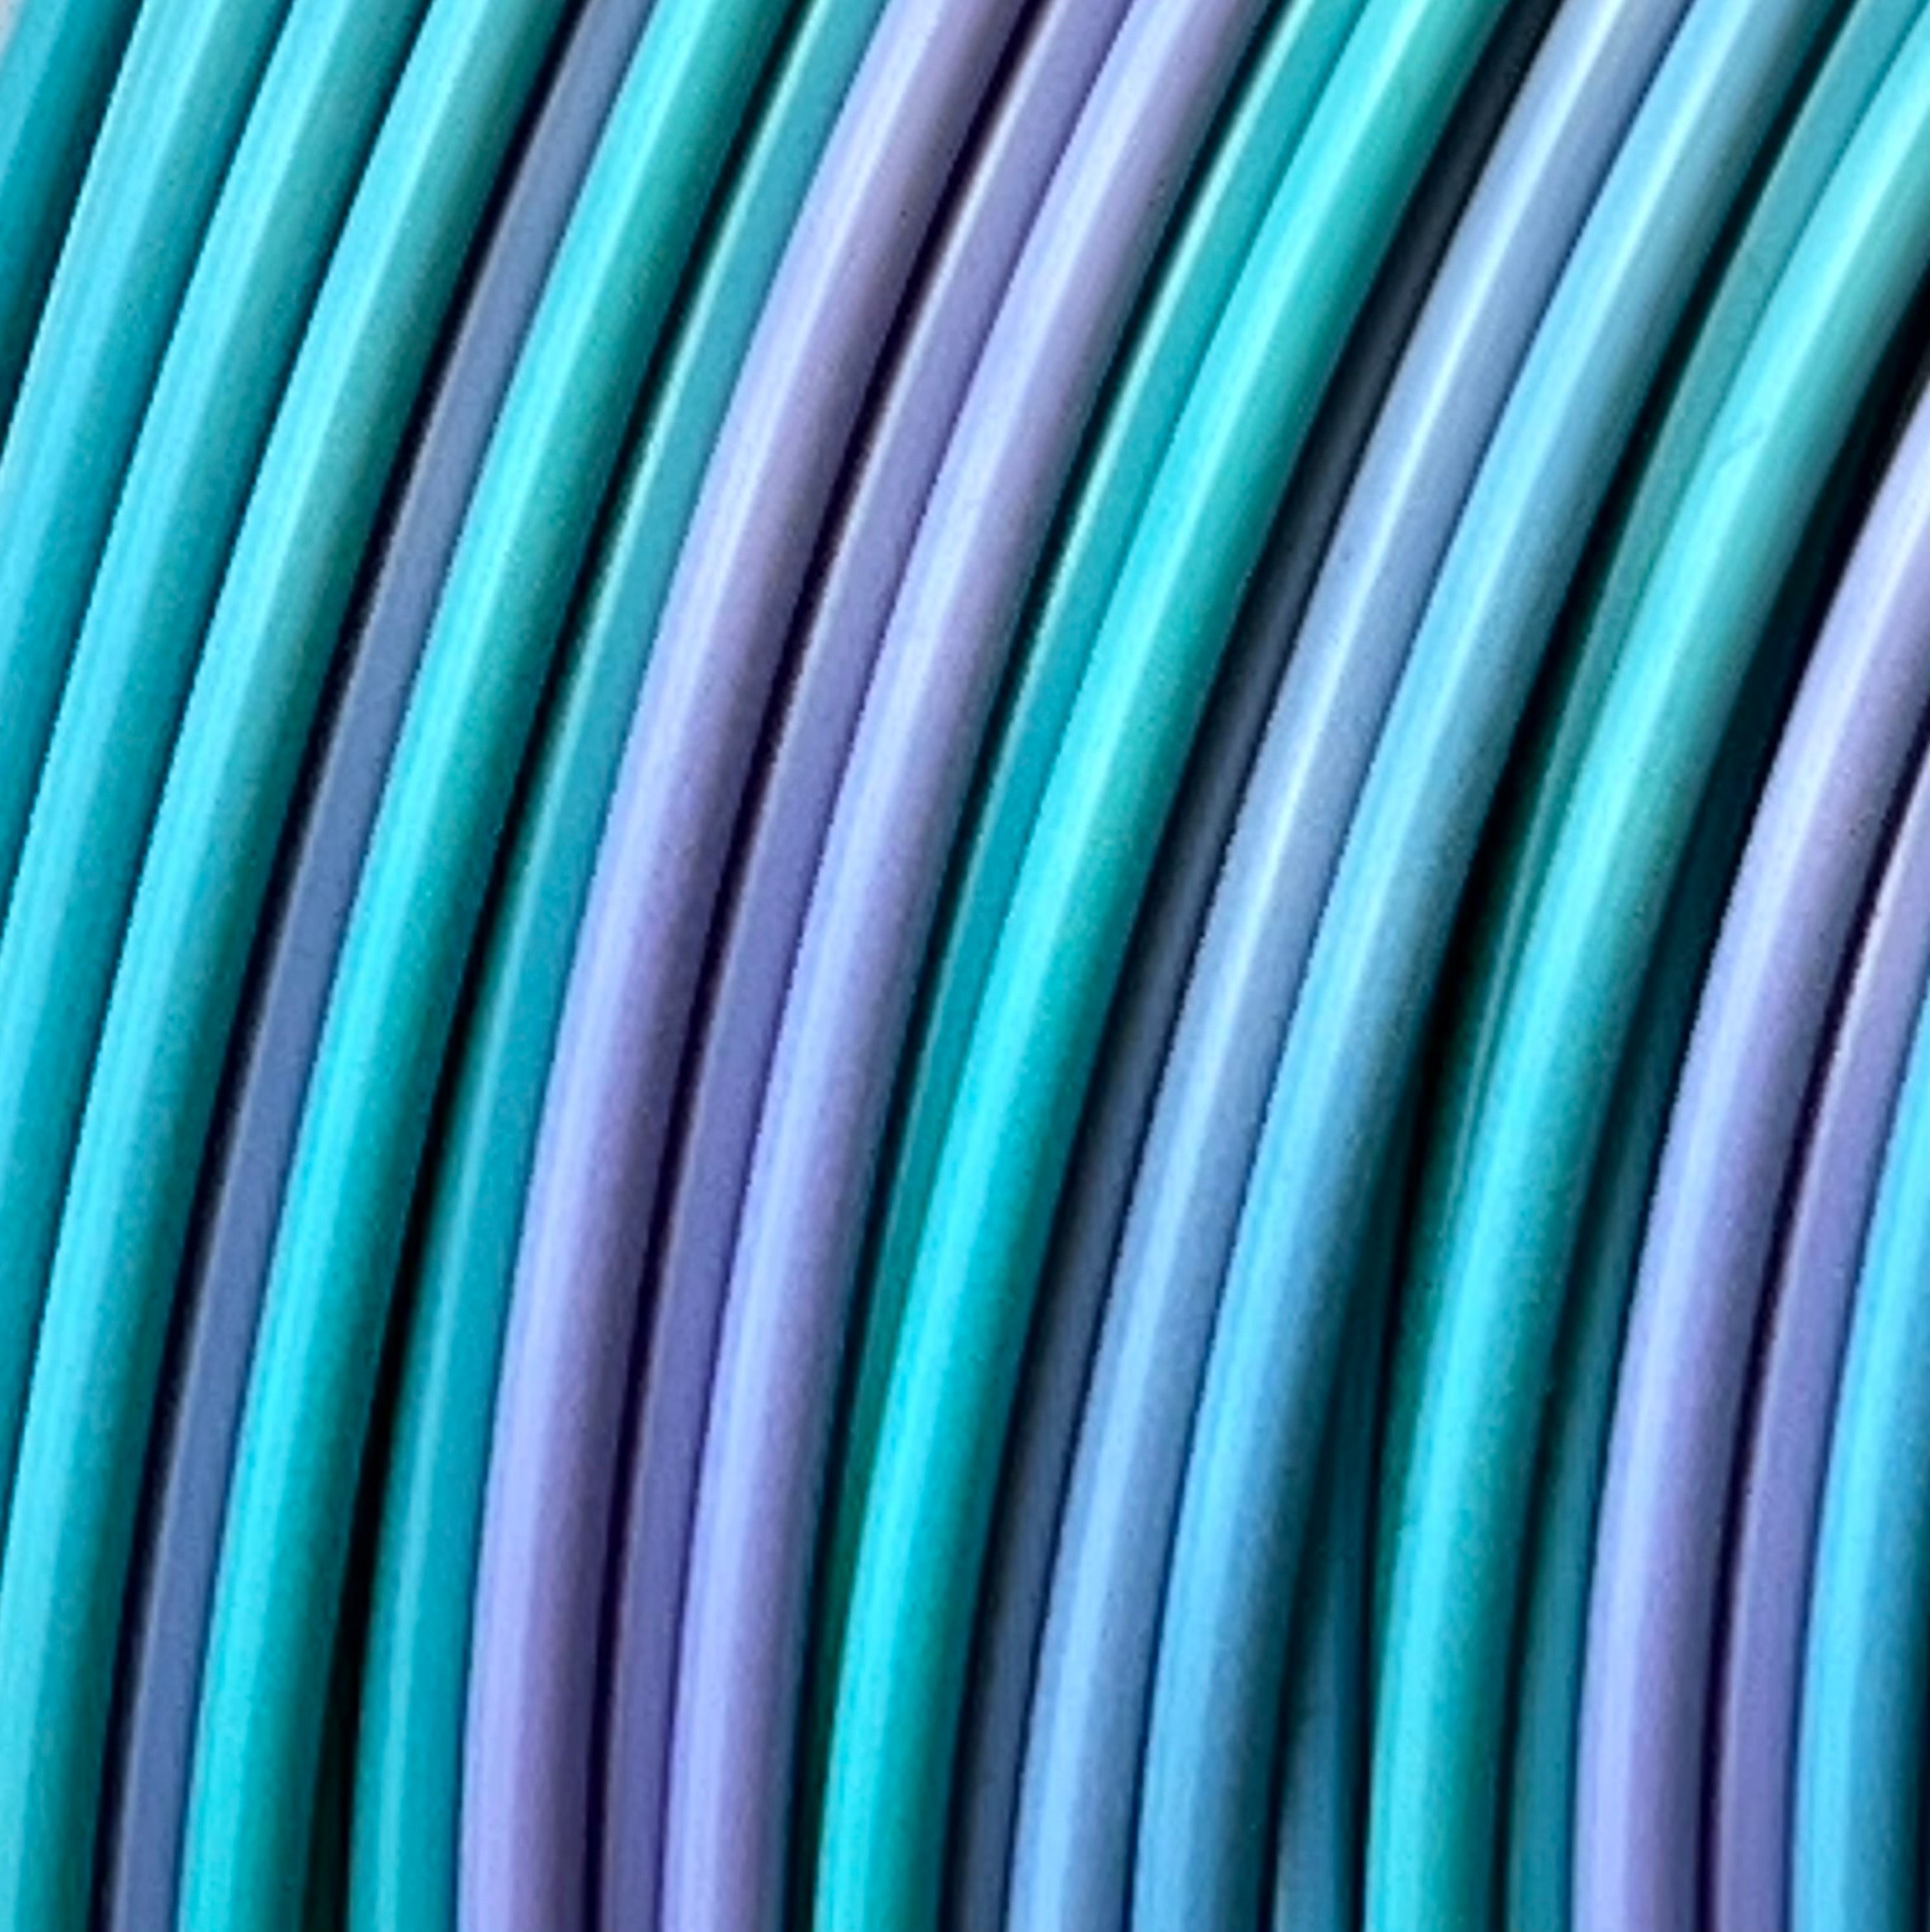 Mermaid Fast Change (purple, blue & green) PLA Filament 1.75mm, 500g